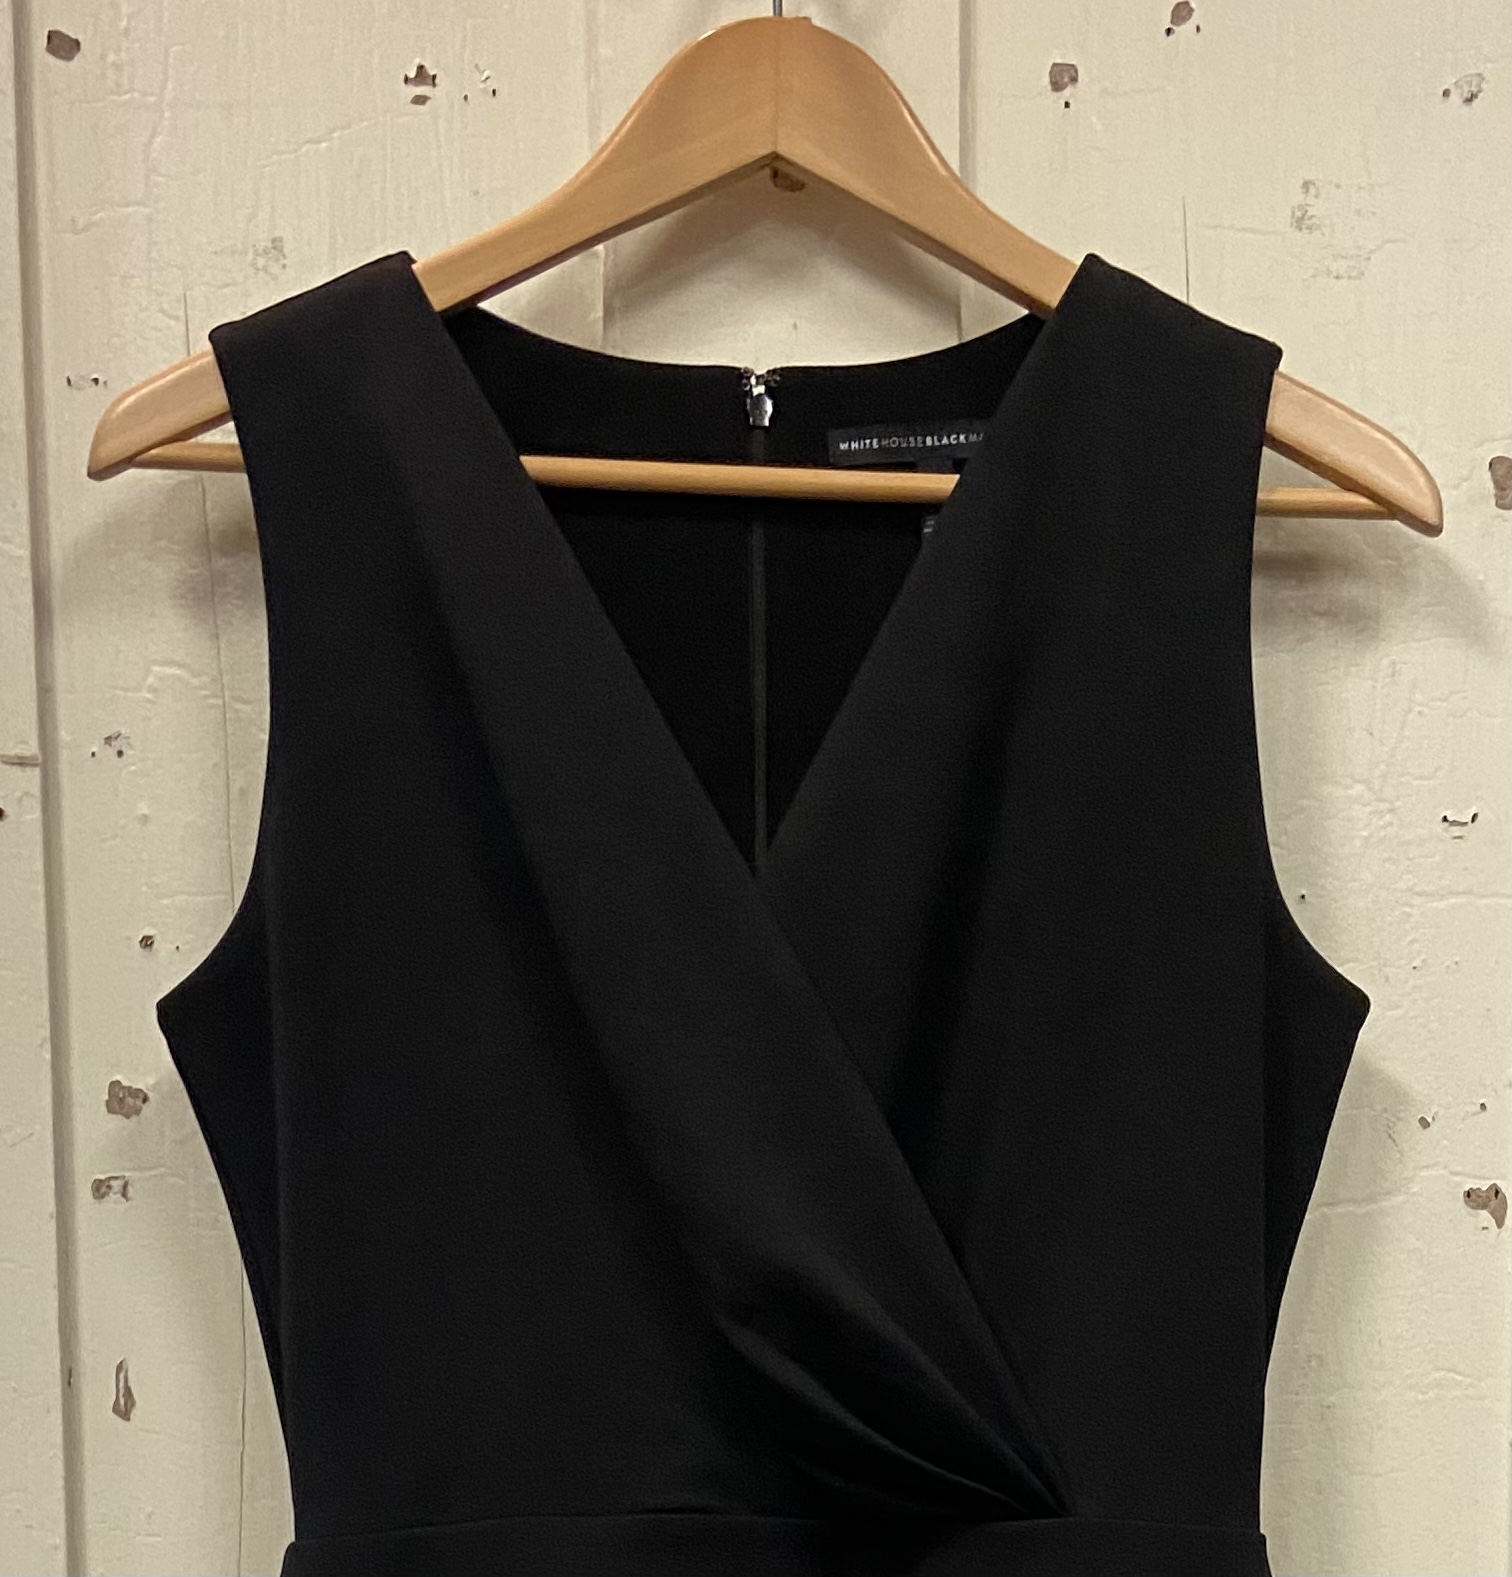 Black Sleeveless Dress
Black
Size: 8